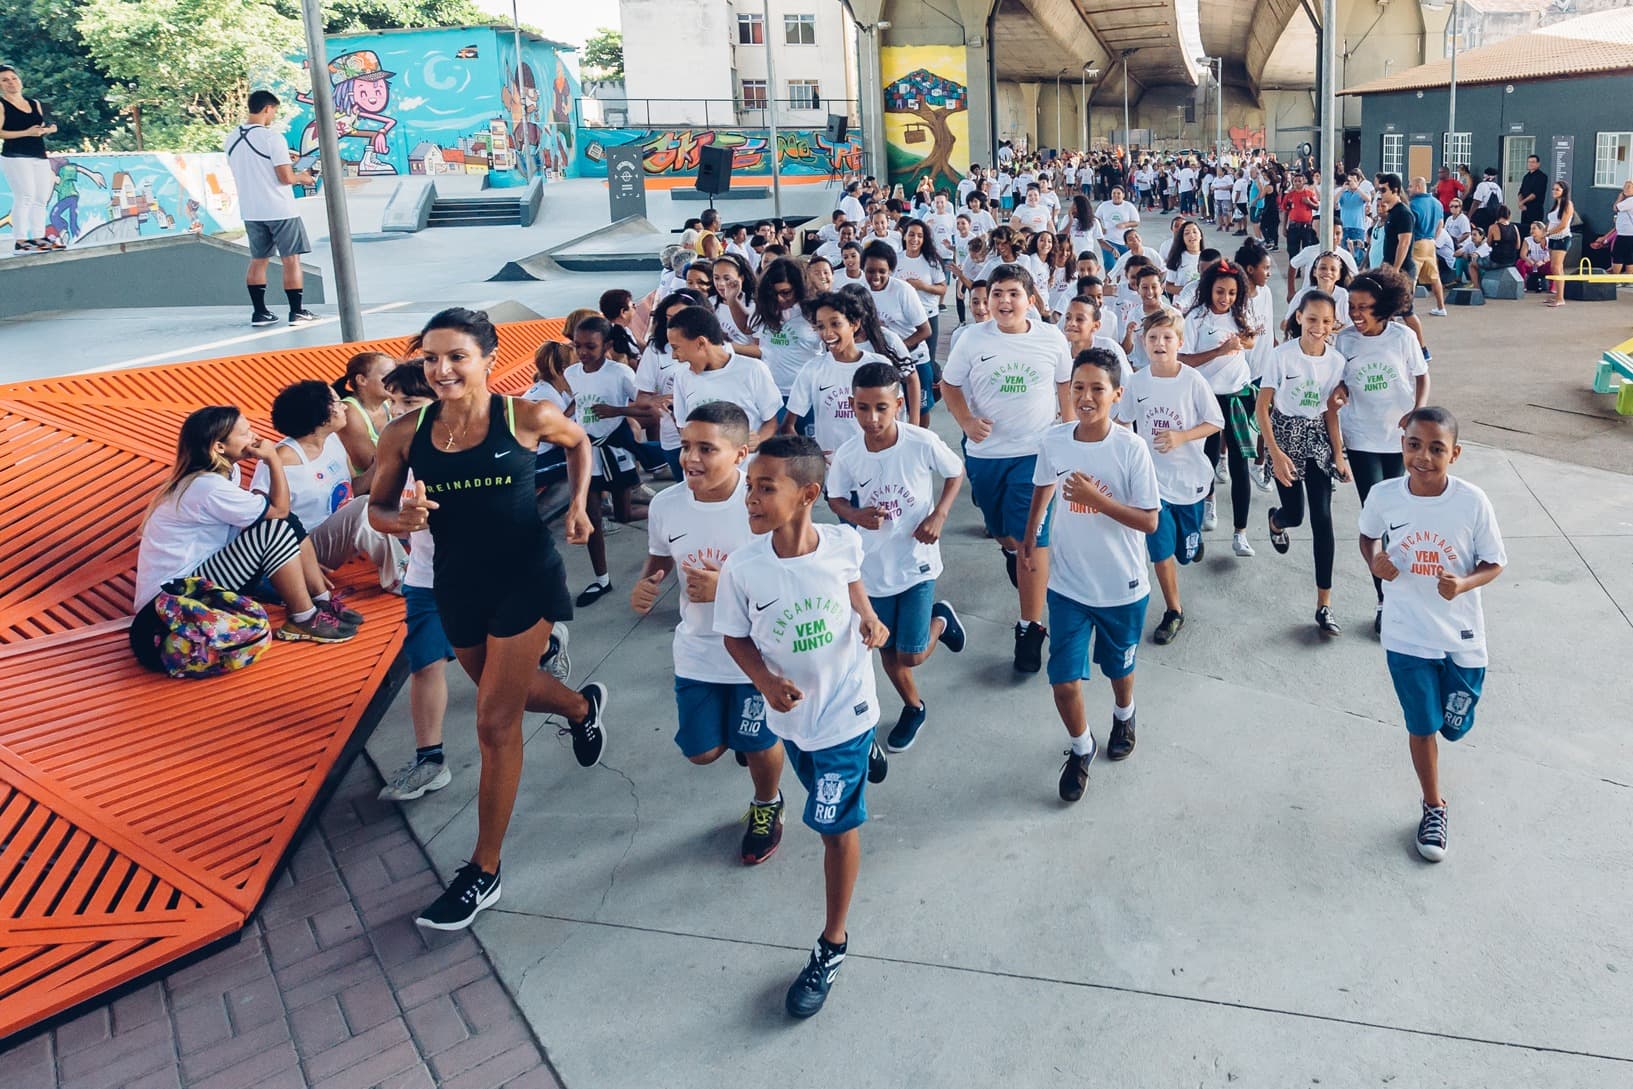 The Nike Youth Physical Activity Community Impact